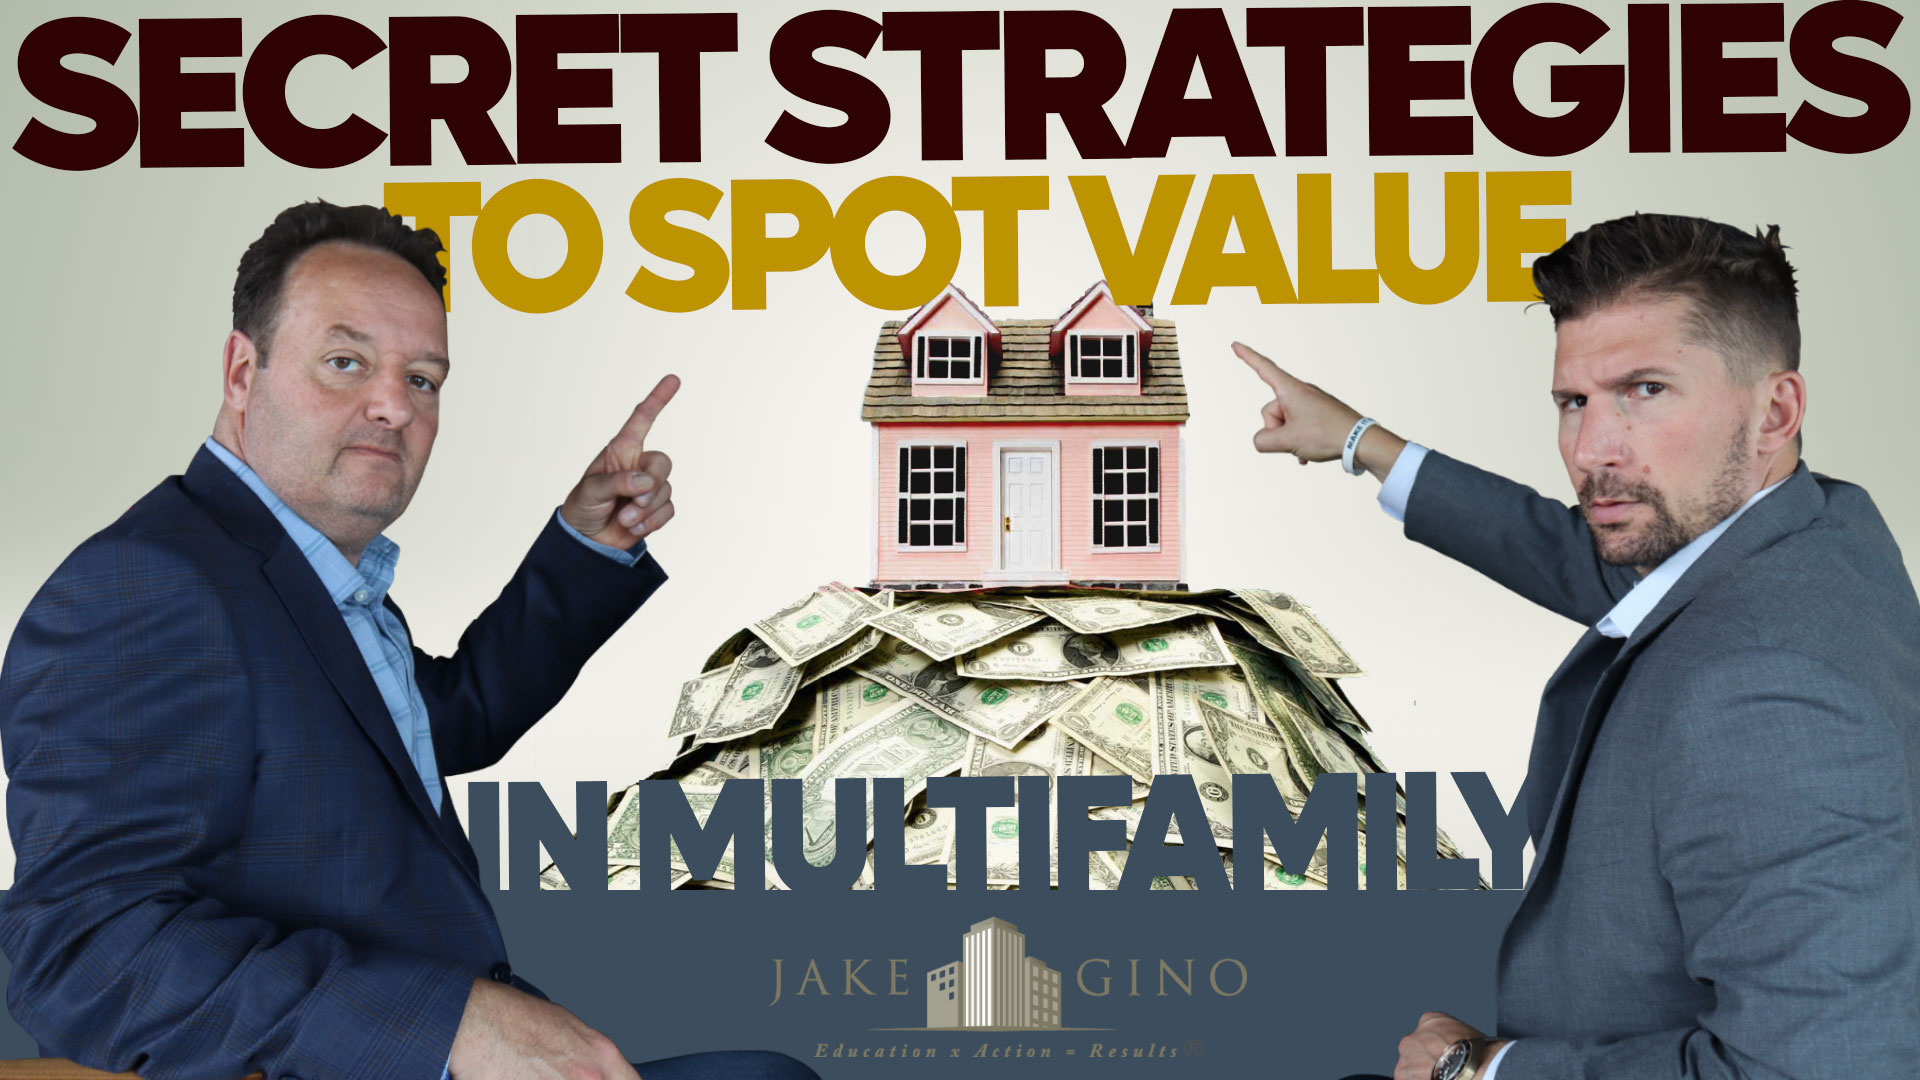 Secret Strategies To Spot Value in Multifamily Real Estate | Jake & Gino